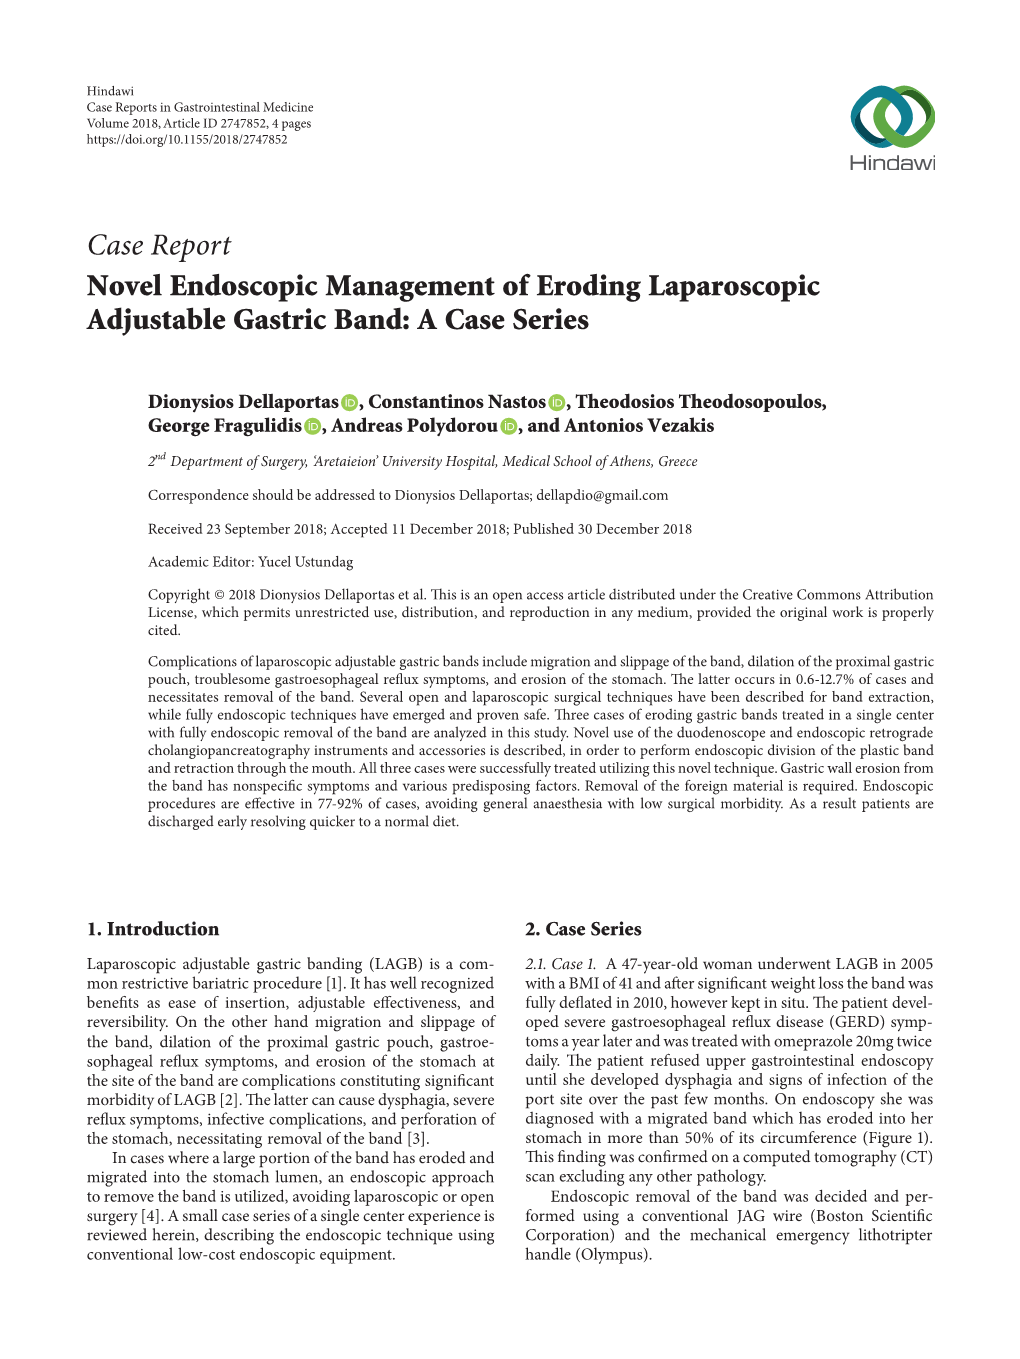 Novel Endoscopic Management of Eroding Laparoscopic Adjustable Gastric Band: a Case Series